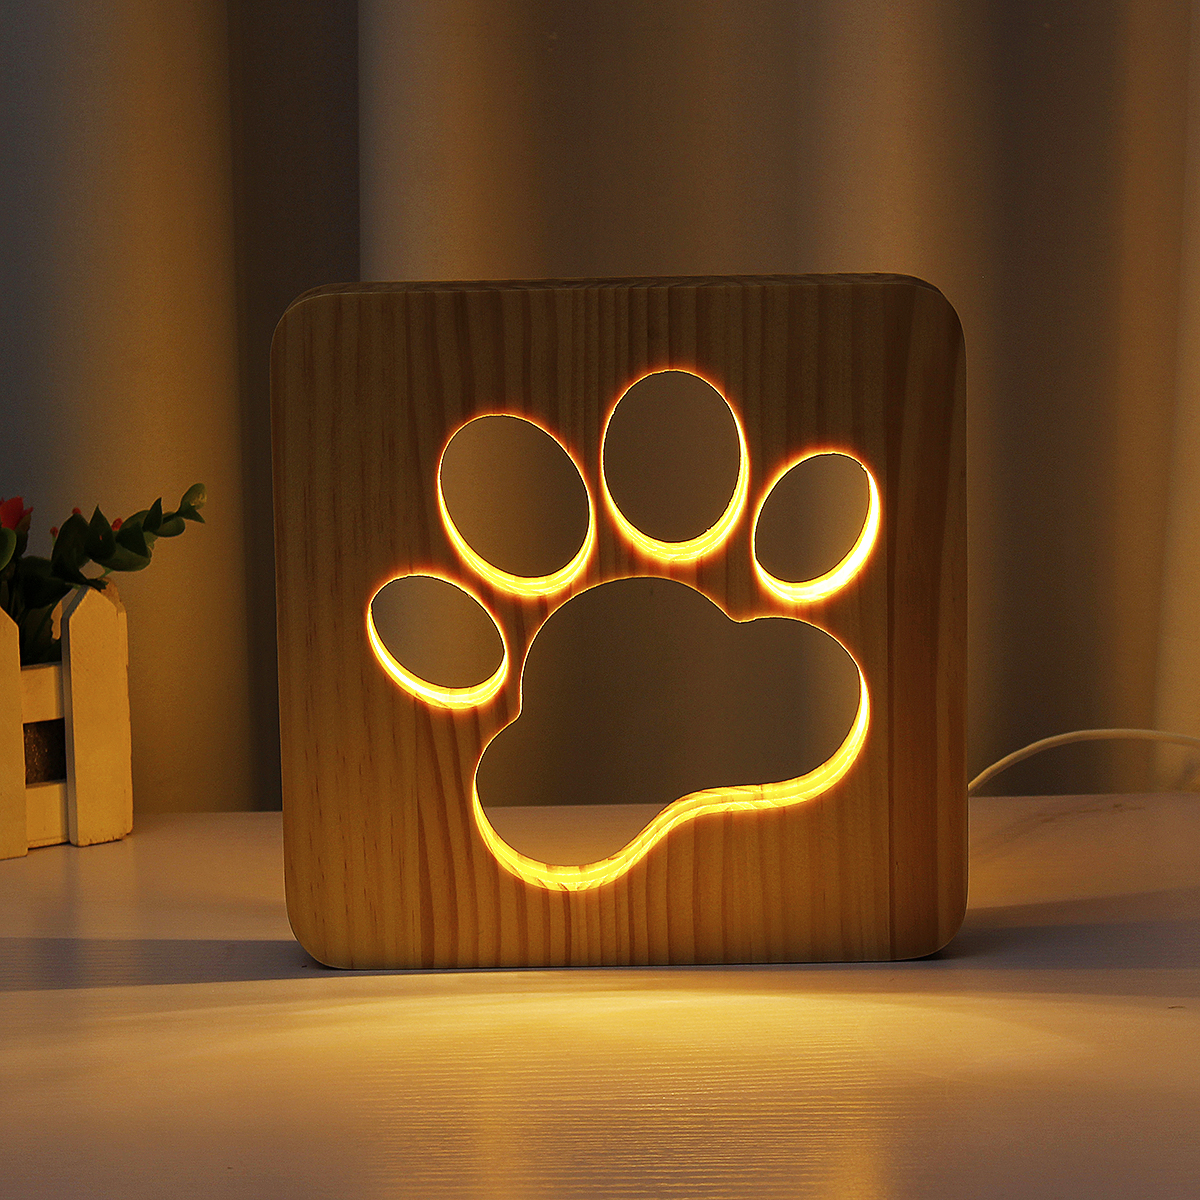 

Dog Feet Claw USB Wood Table Night Light Desk Bedside Lamp Home Bedroom Decor